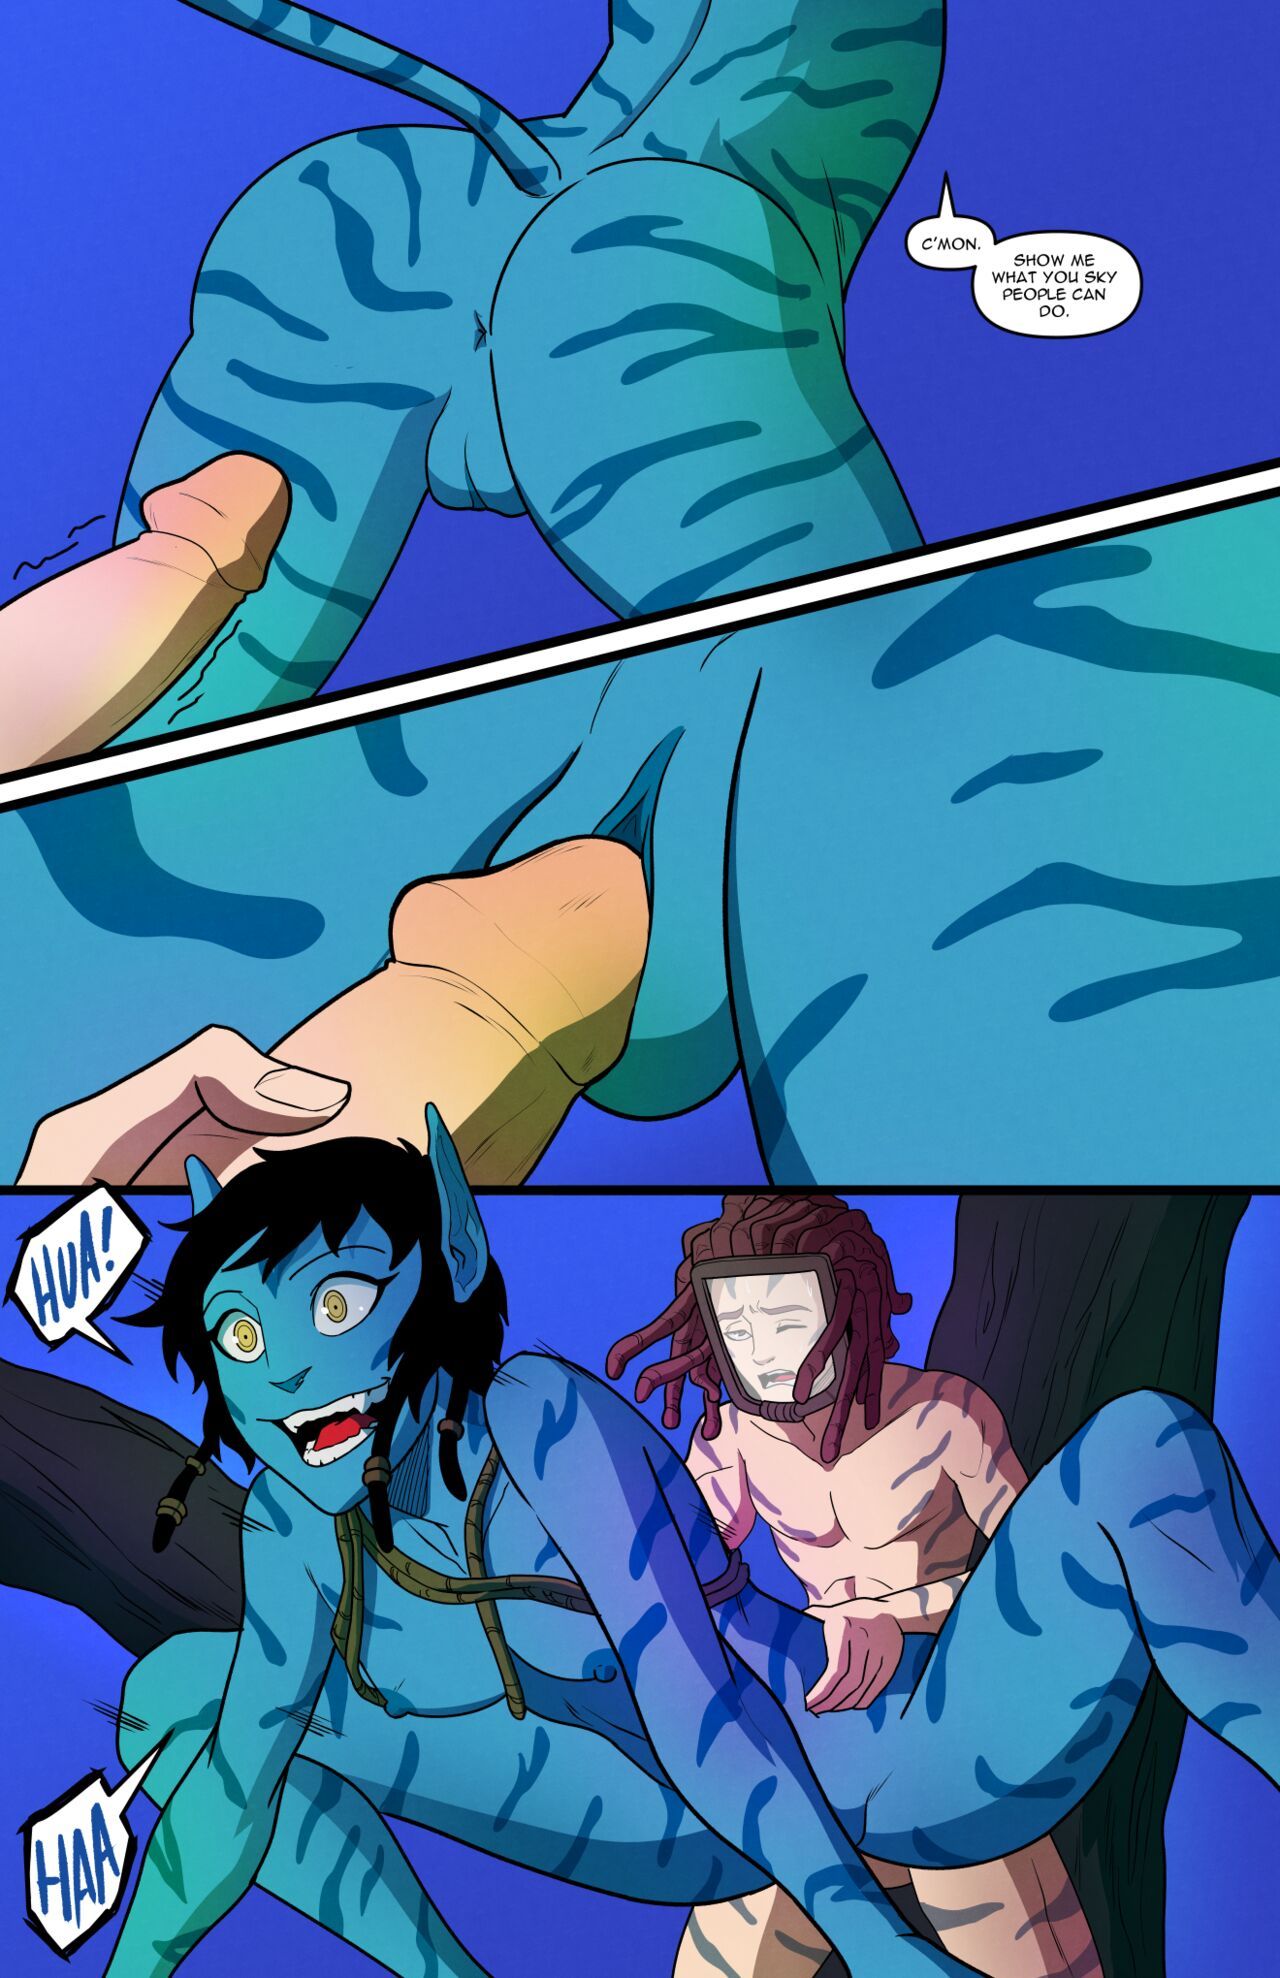 Avatar: Along Came a Spider Porn Comic english 09